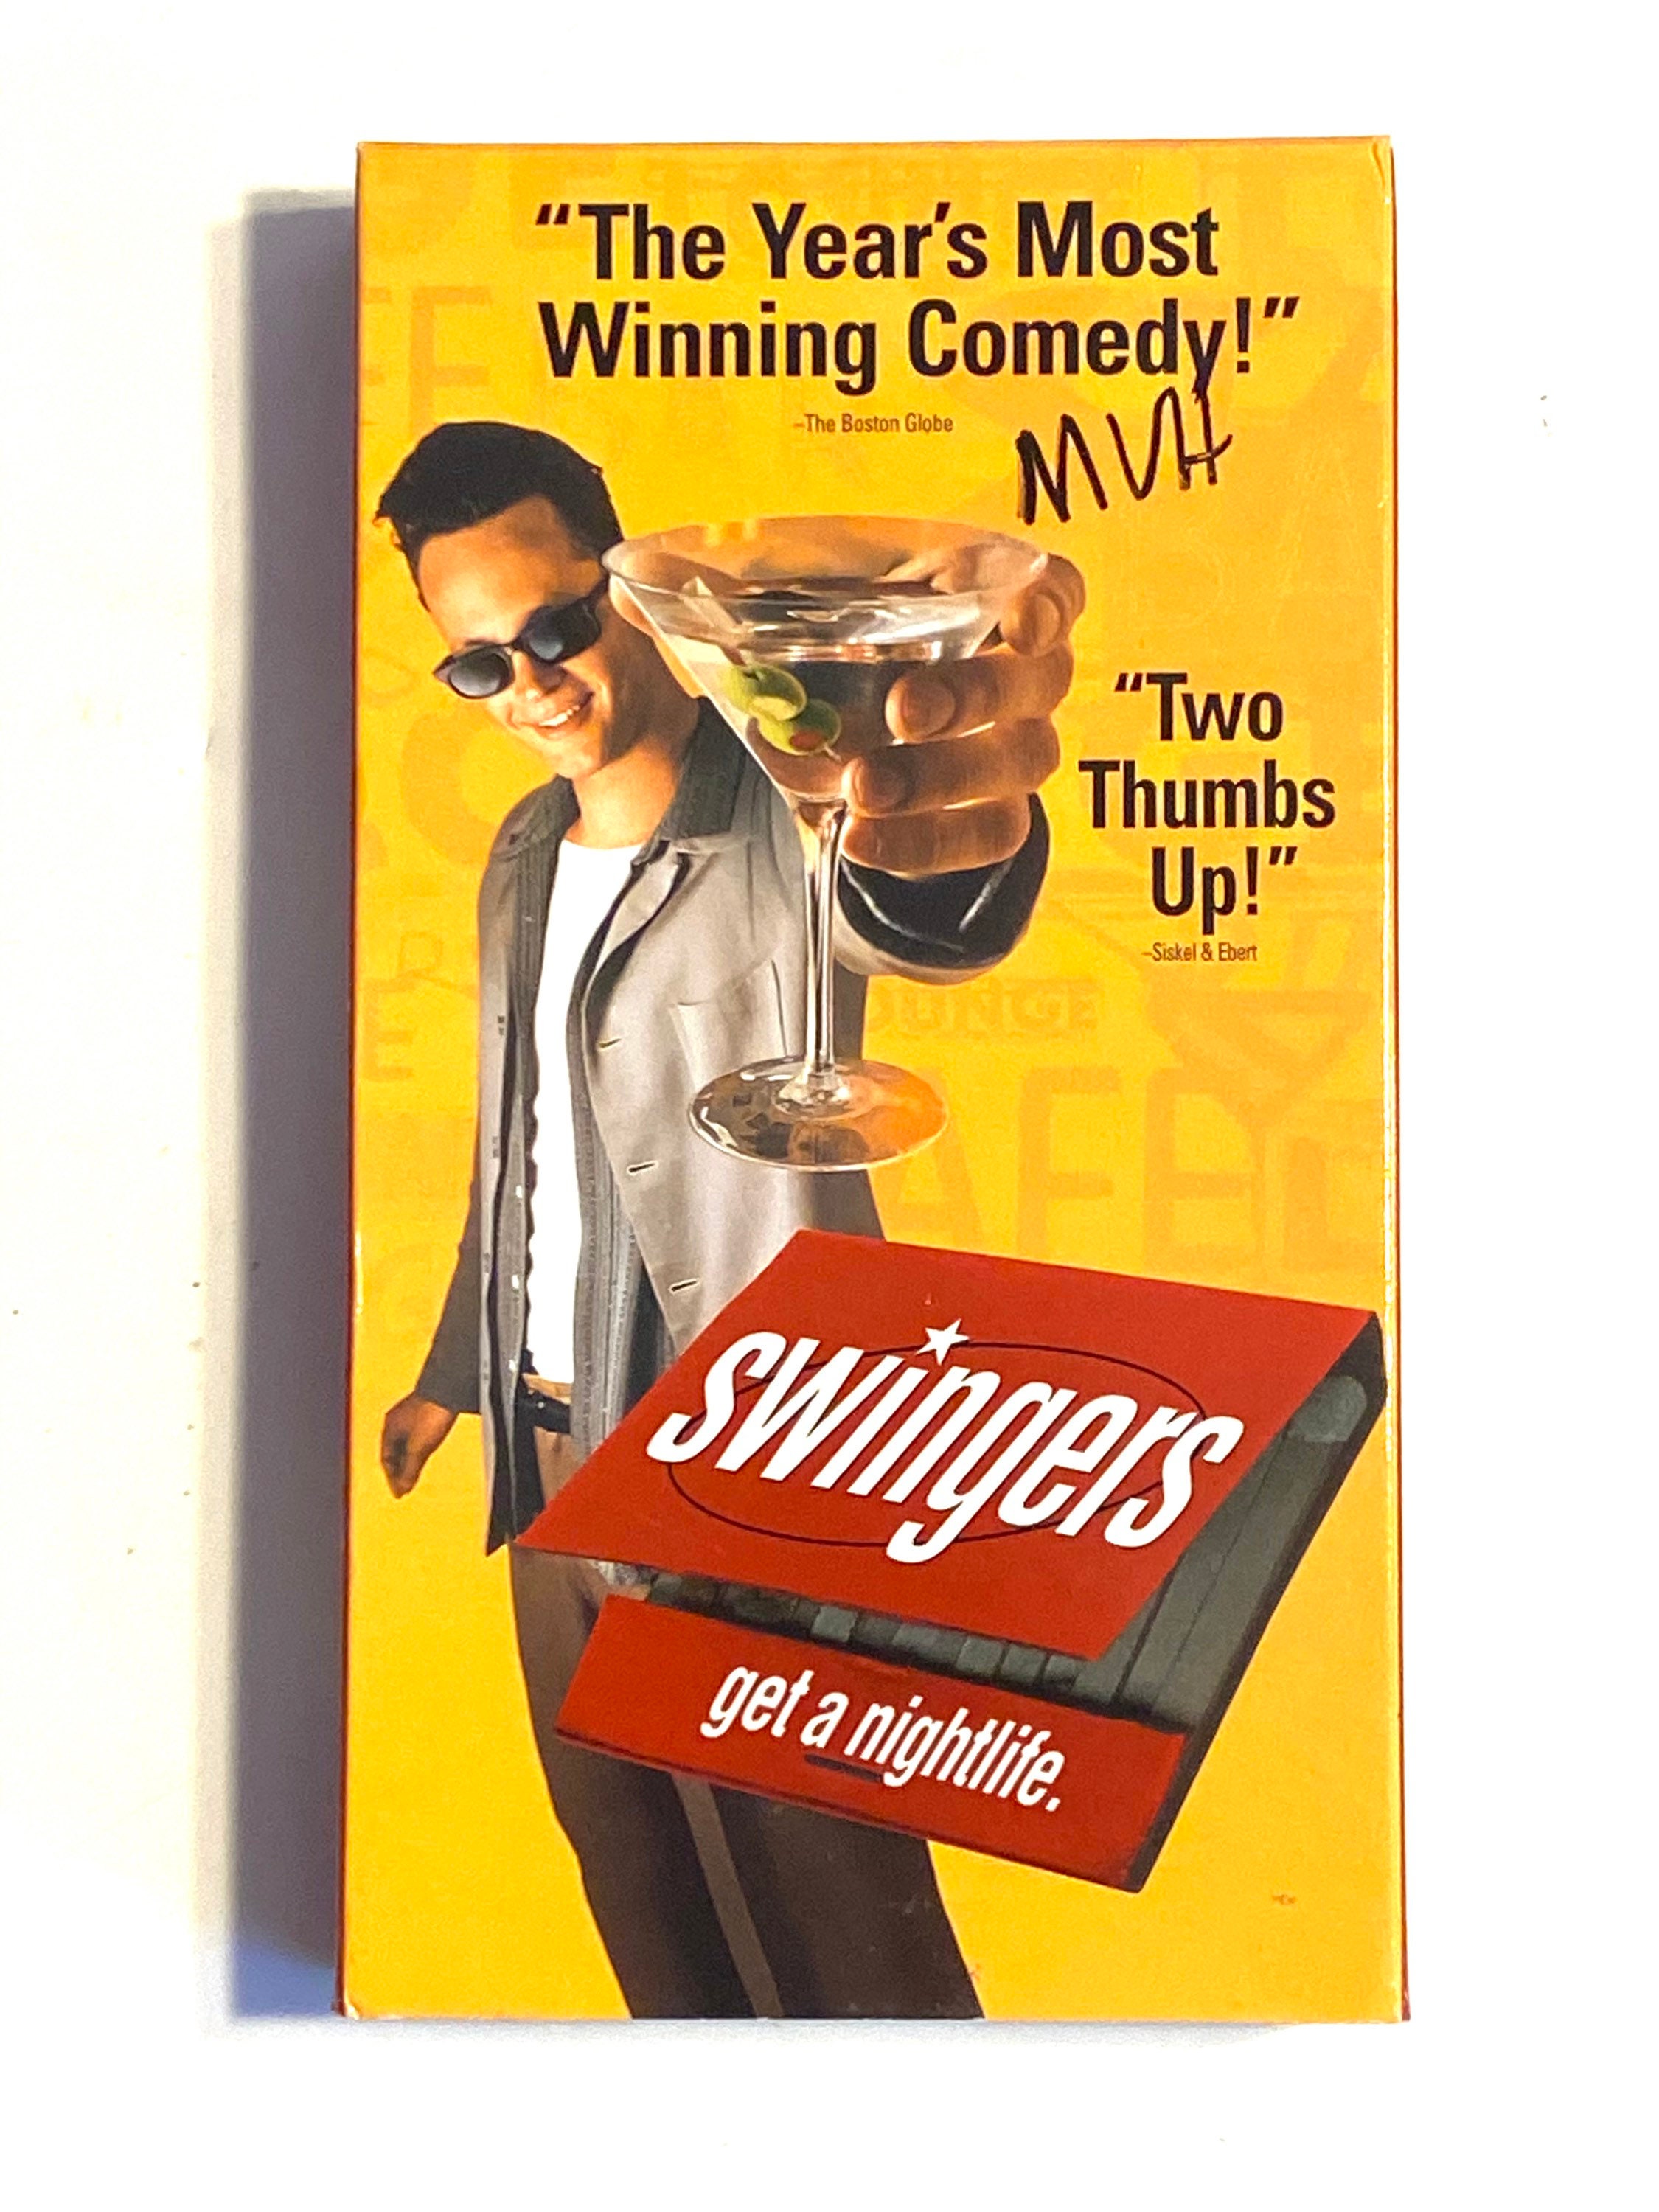 Swingers Full Movie